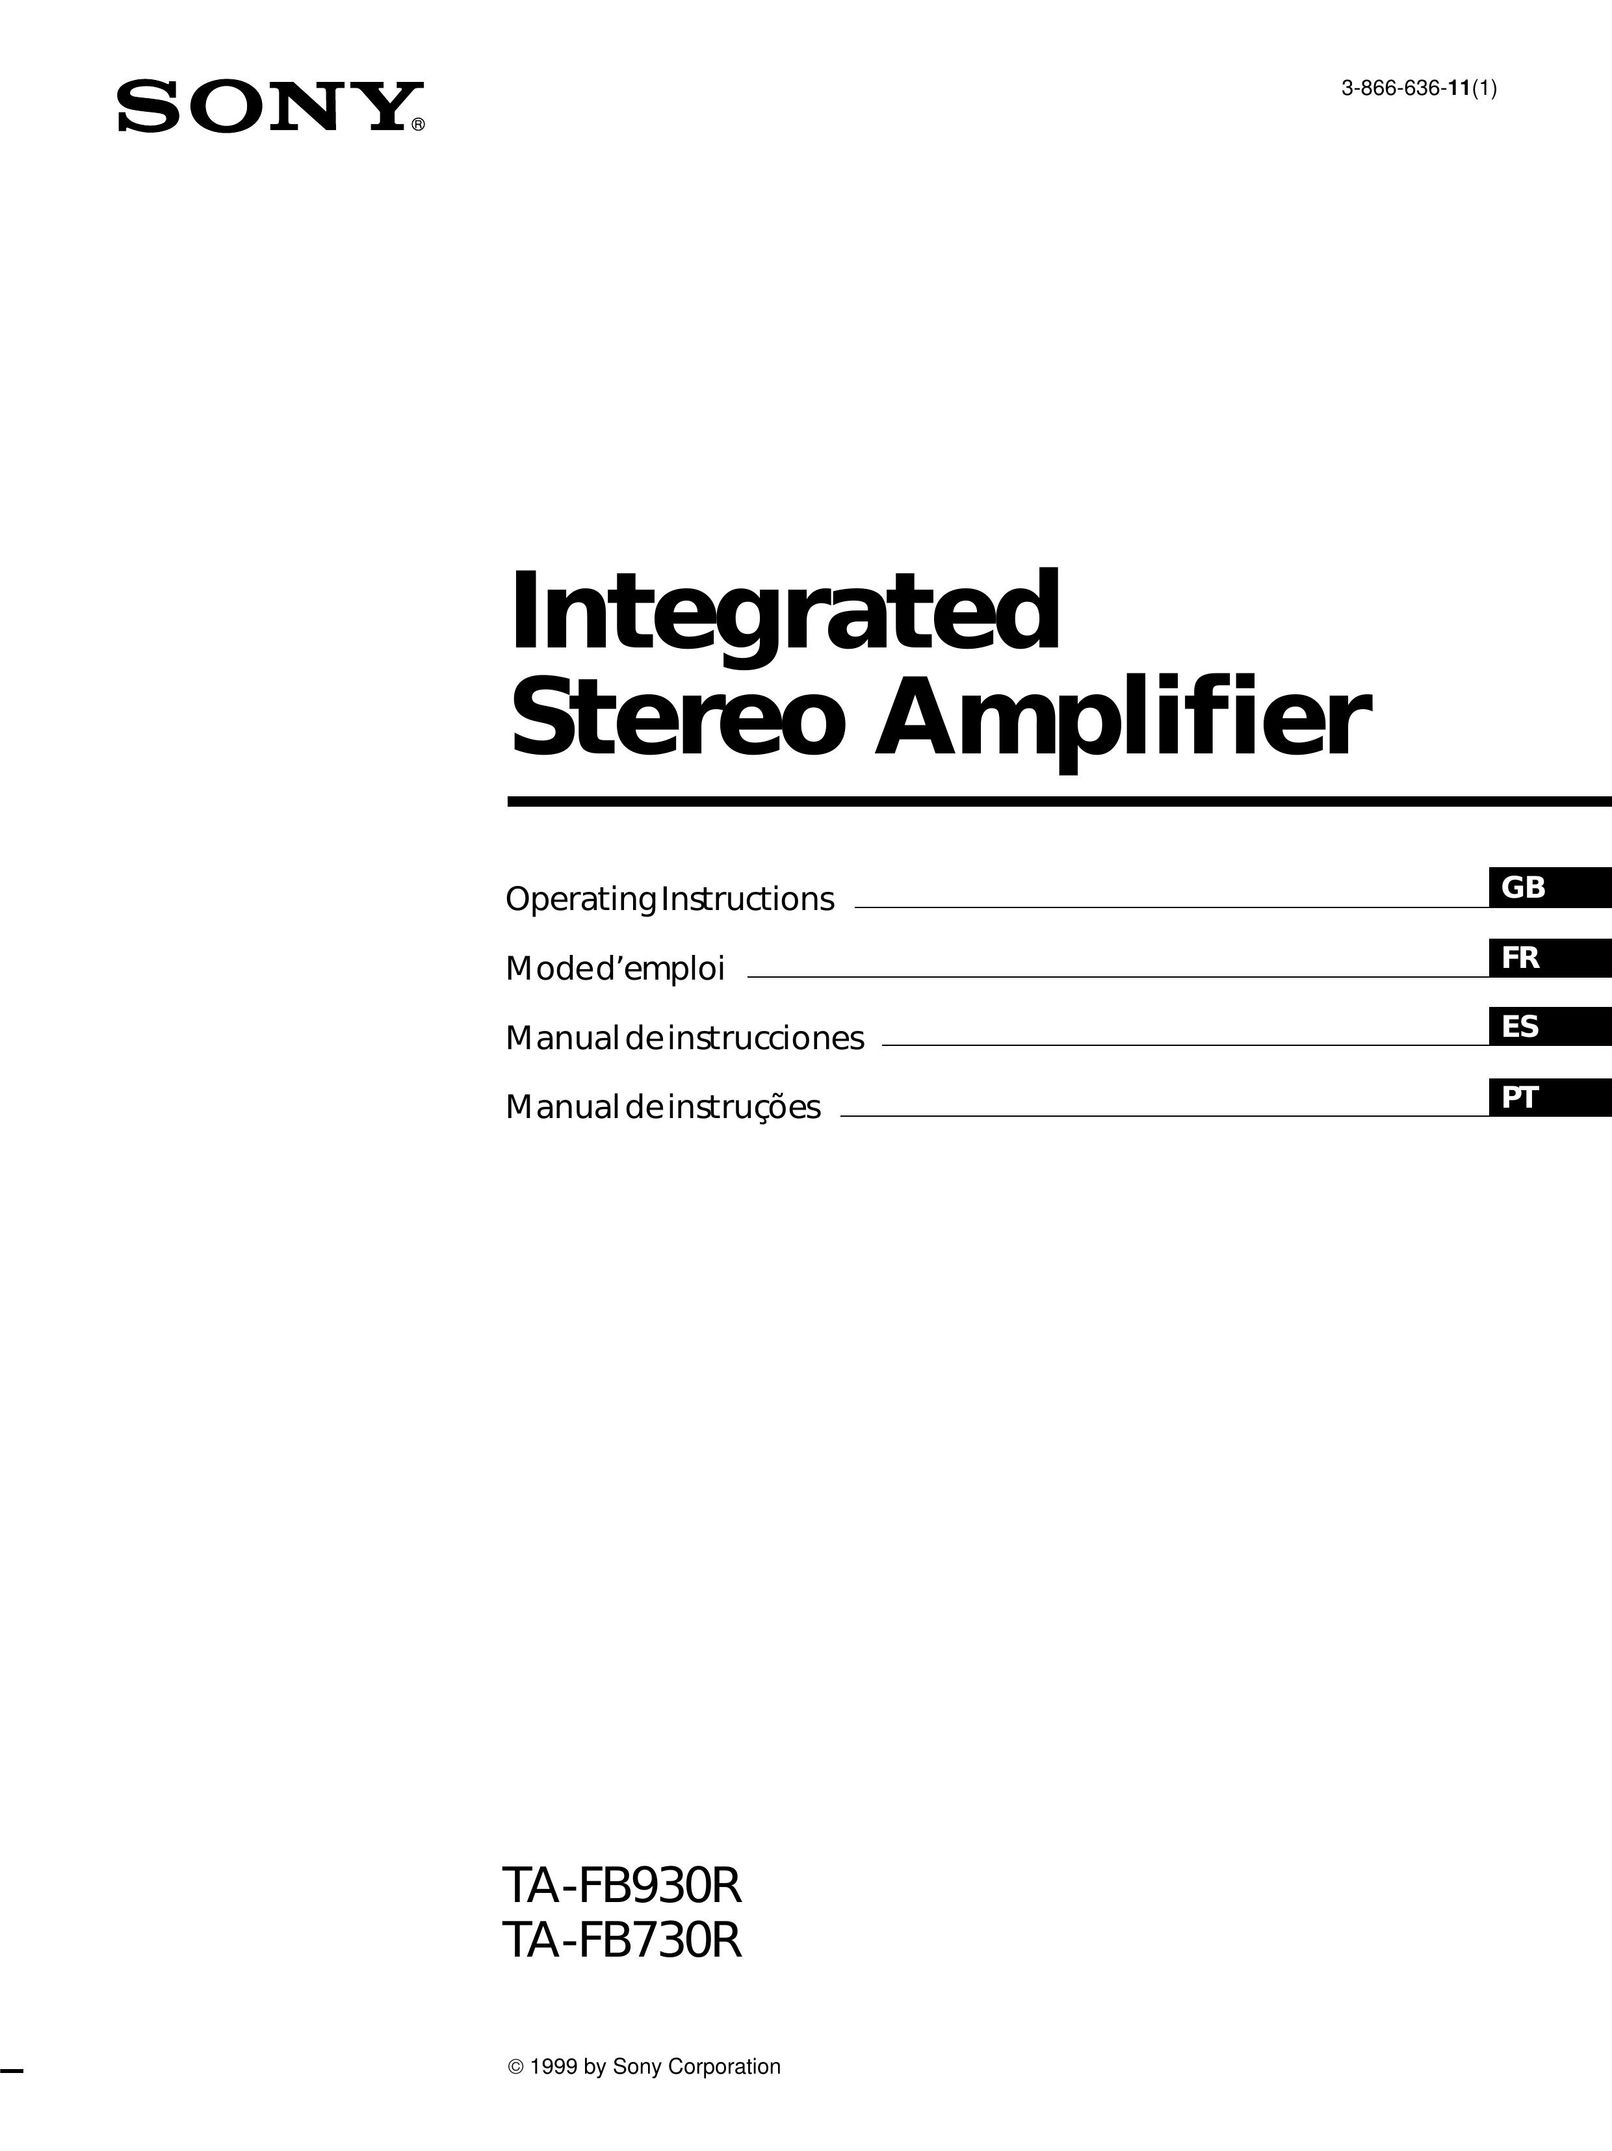 Sony TA-FB730R Stereo Amplifier User Manual